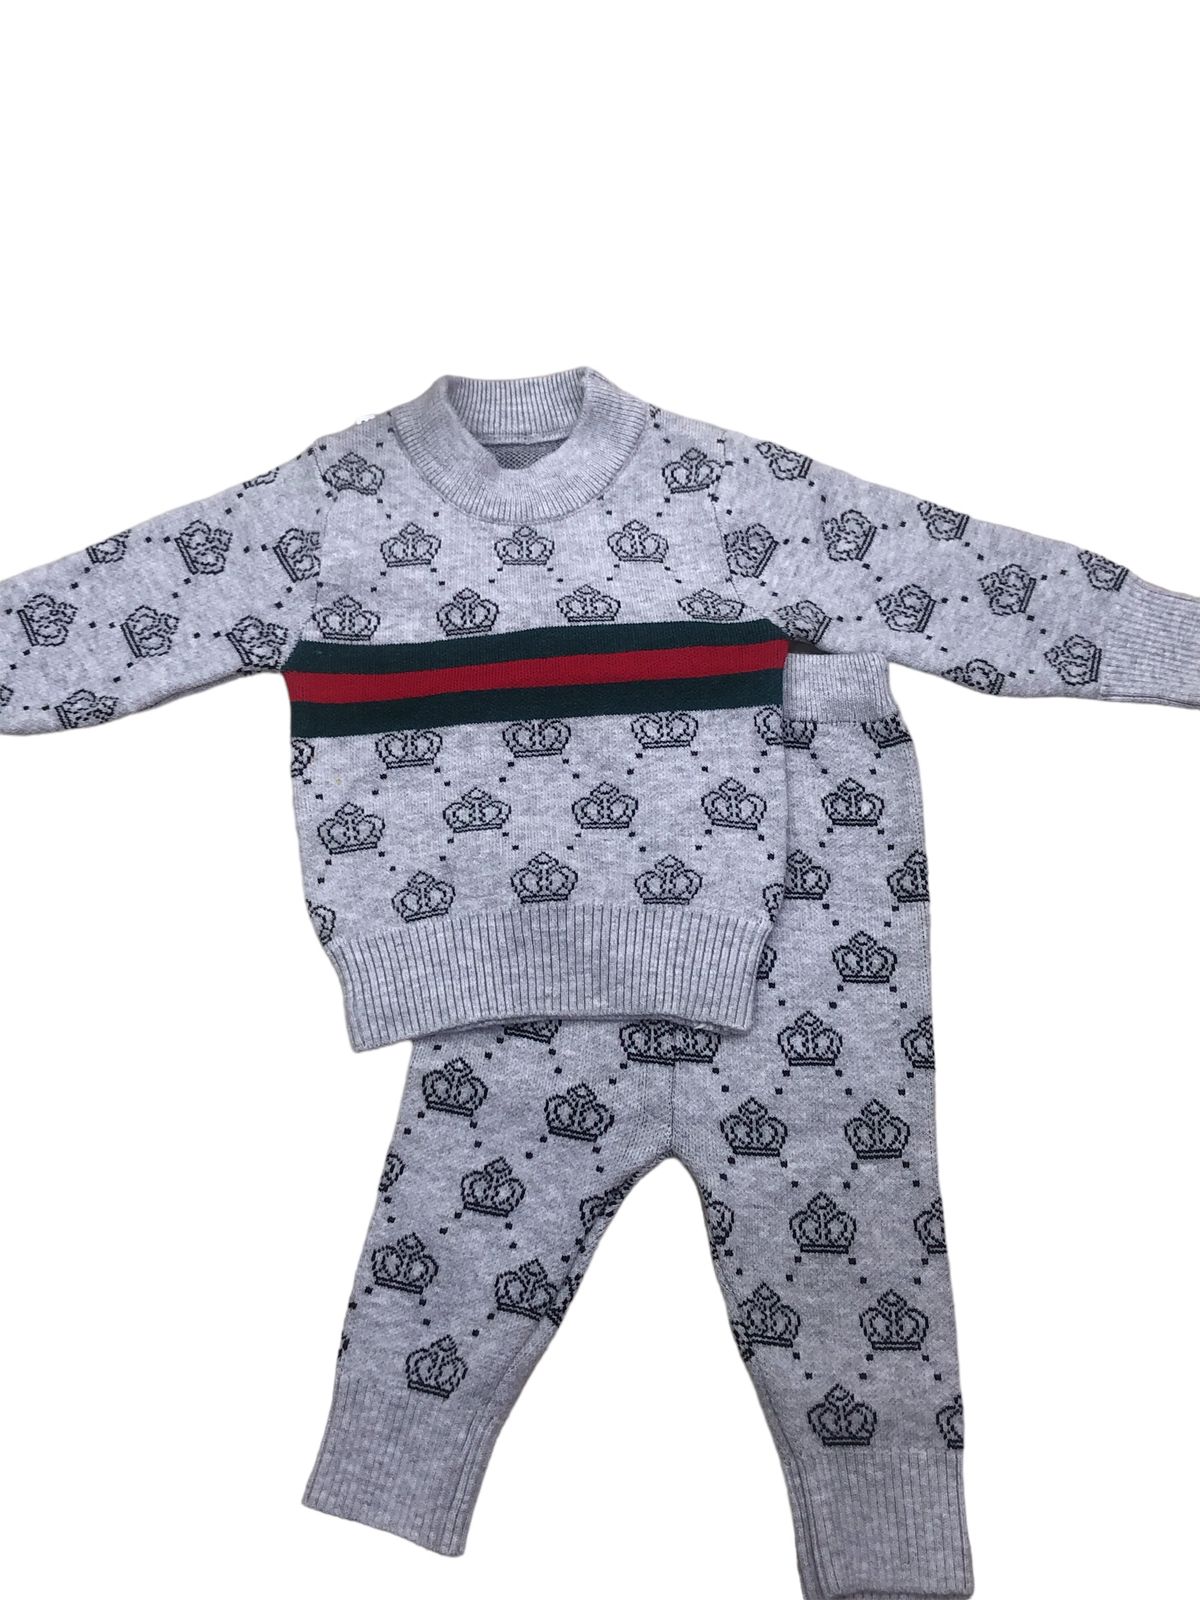 Baby woolen suit Burberry style  0m +